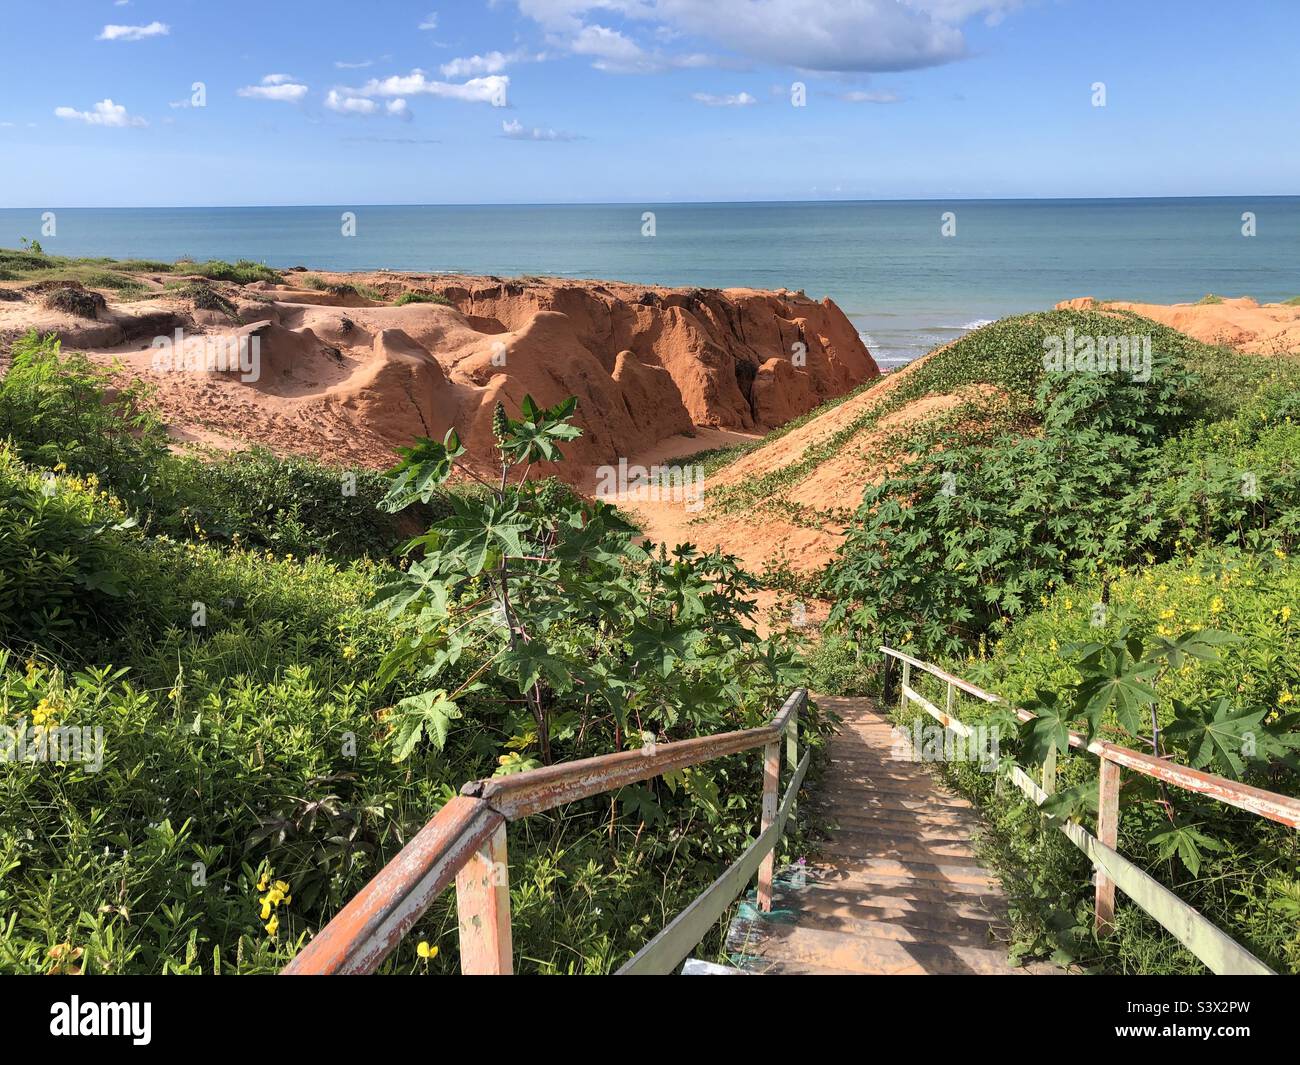 Northwestern Brazil coastline landscape. Stock Photo